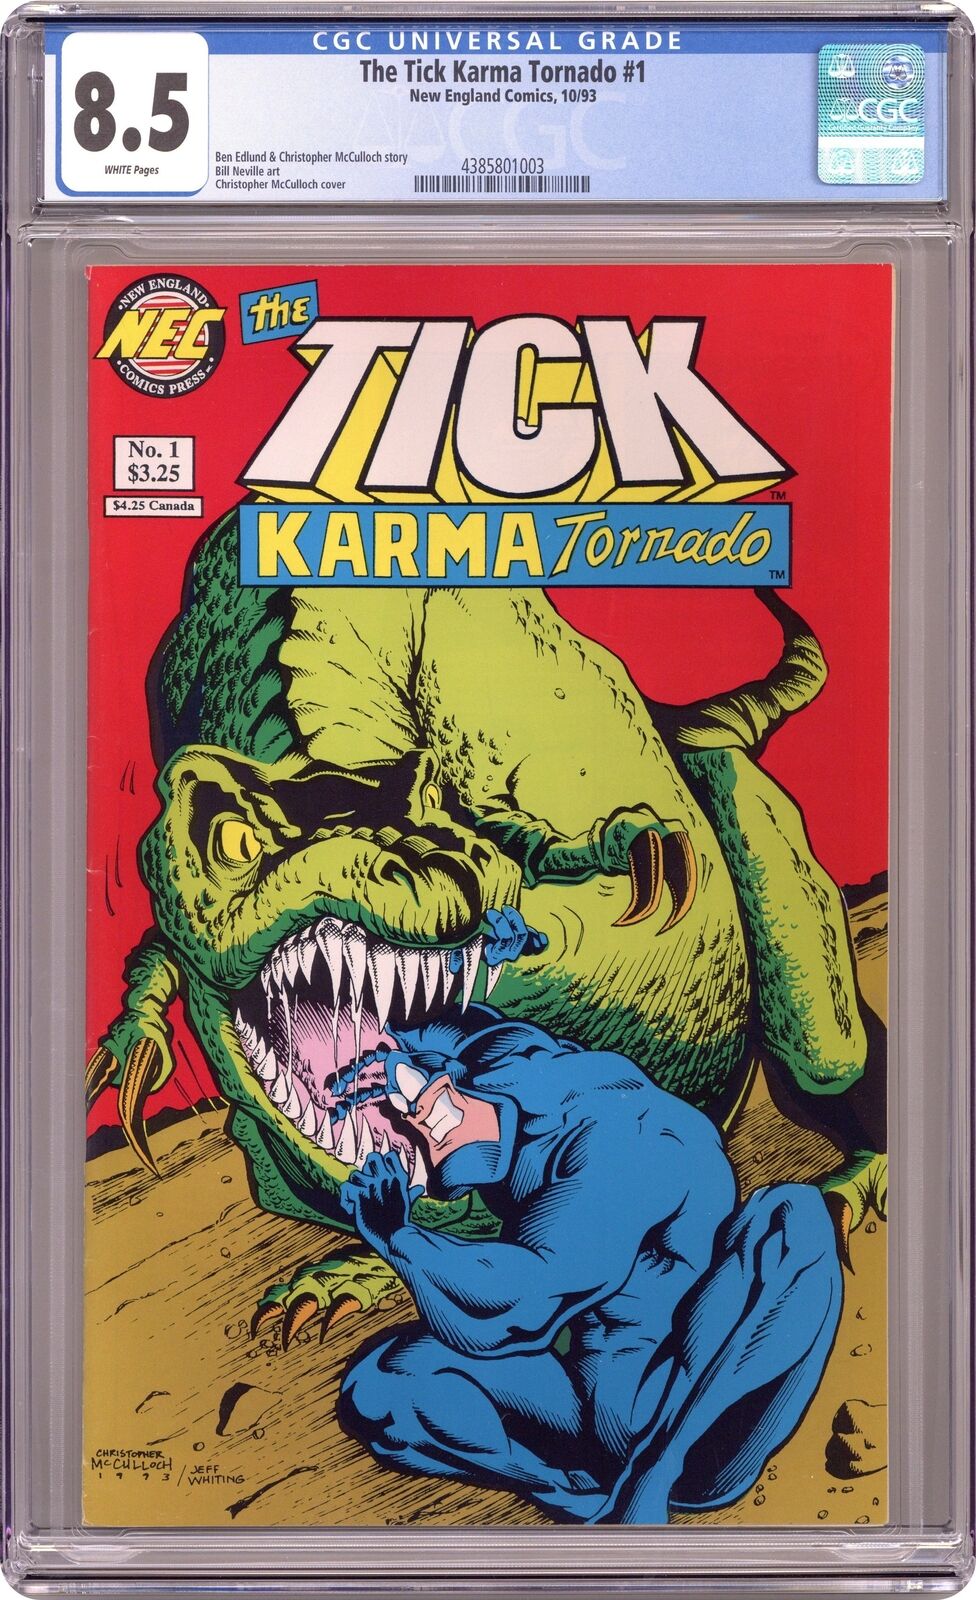 Tick Karma Tornado #1 CGC 8.5 1993 4385801003